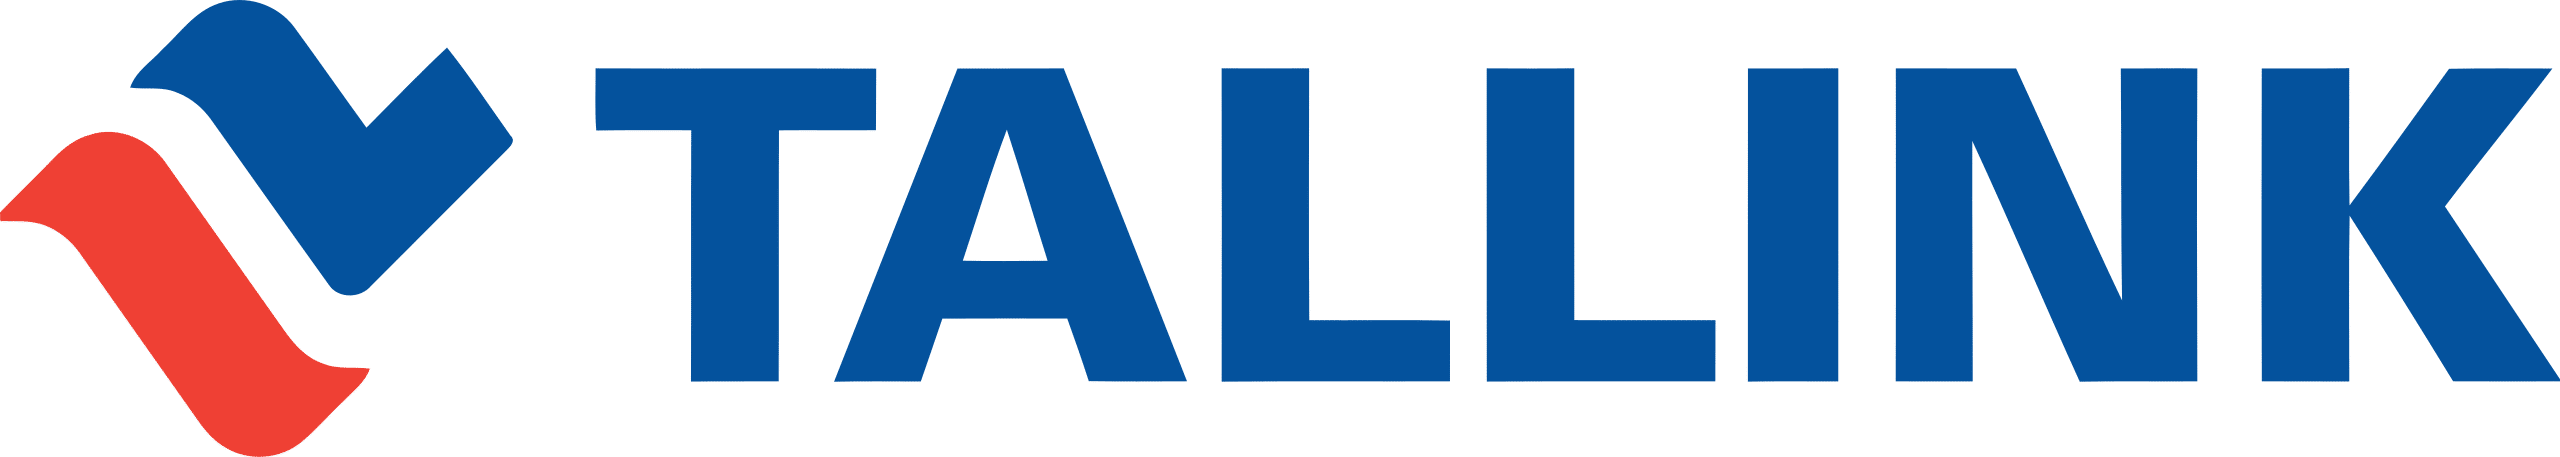 Tallink_logo